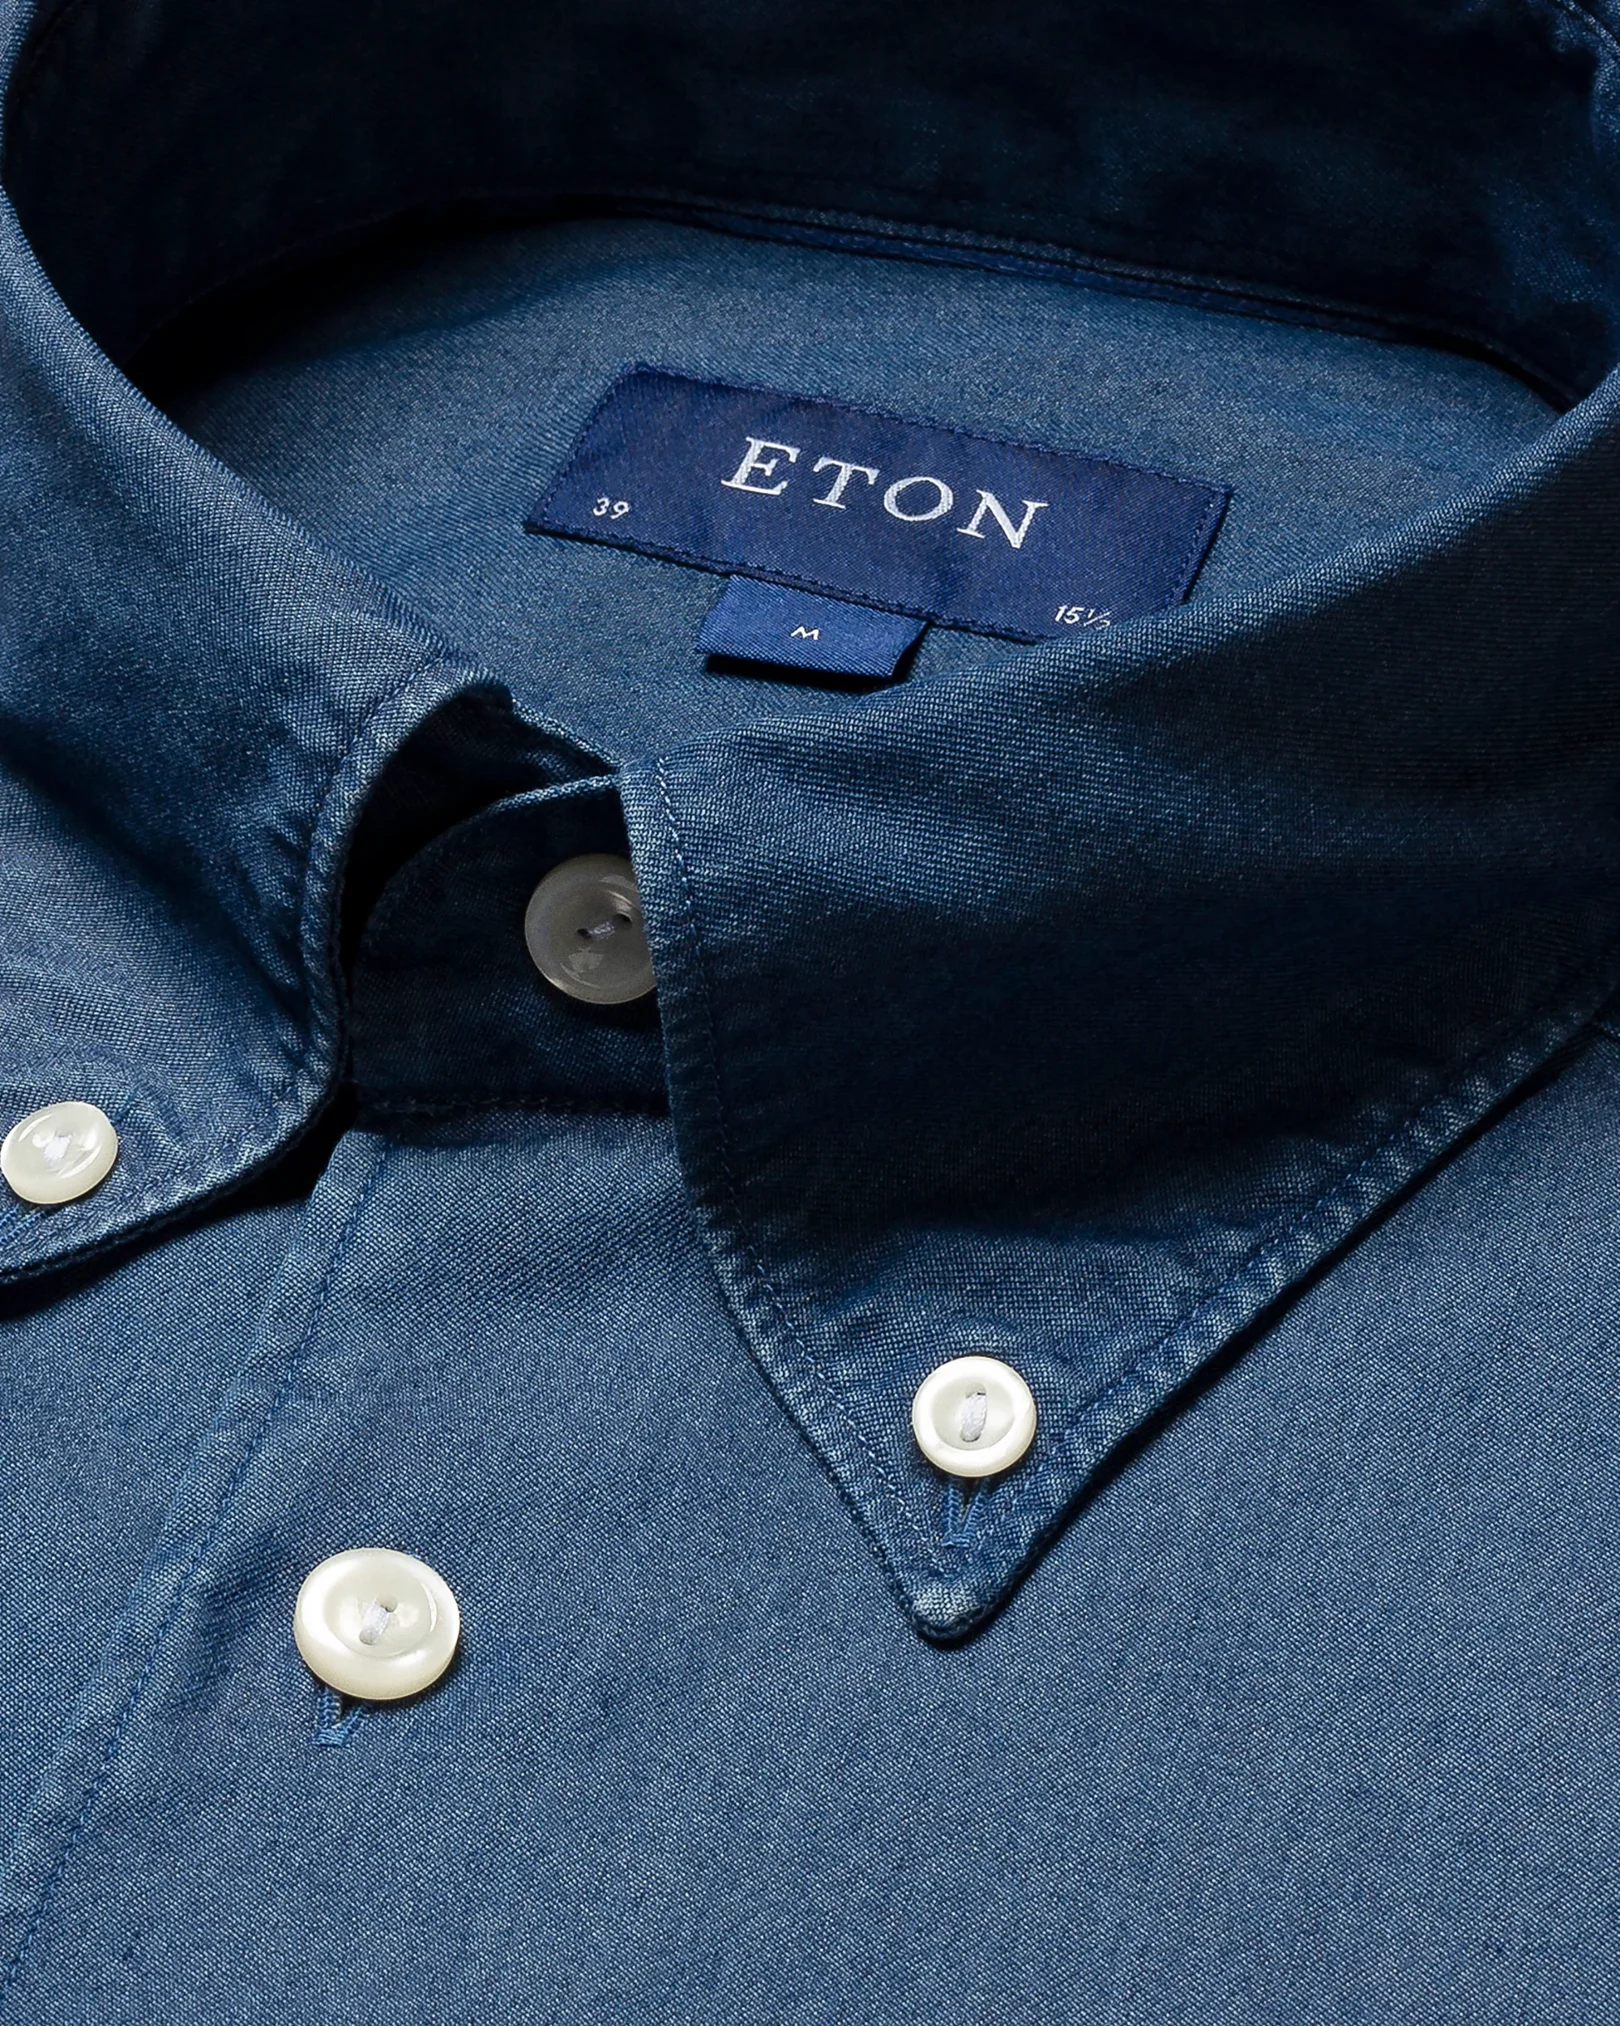 Eton - mid blue denim shirt button down